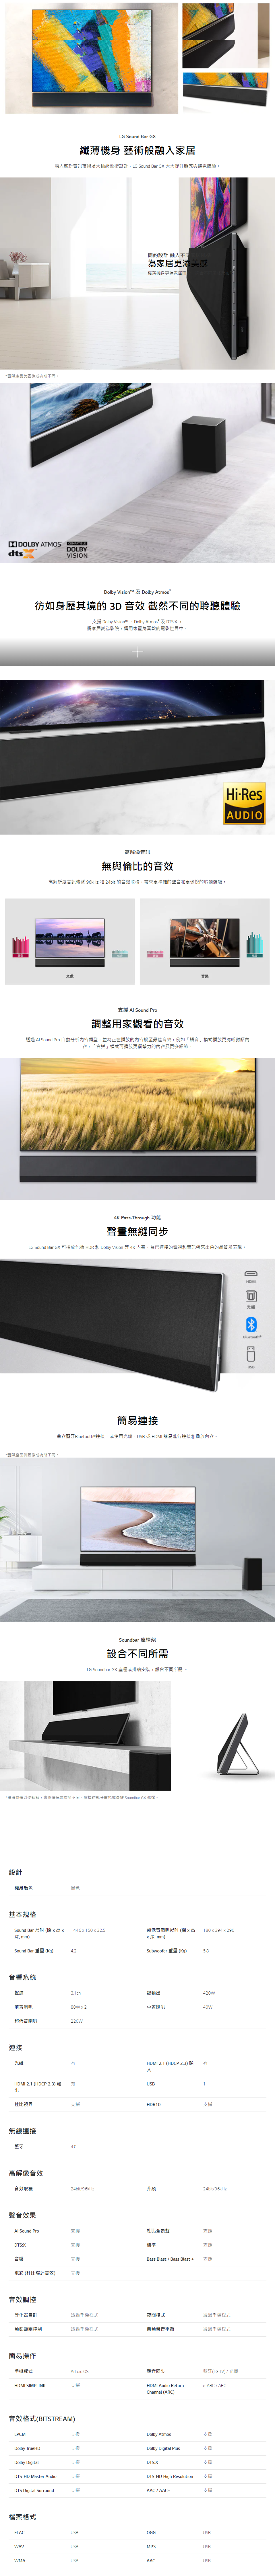 LG 樂金 GX 3.1 聲道杜比全景聲 High Res Audio Sound Bar (贈品) (有關登記方法及換領詳情，請瀏覽https://www.lg.com/hk/support/promotion-gift)